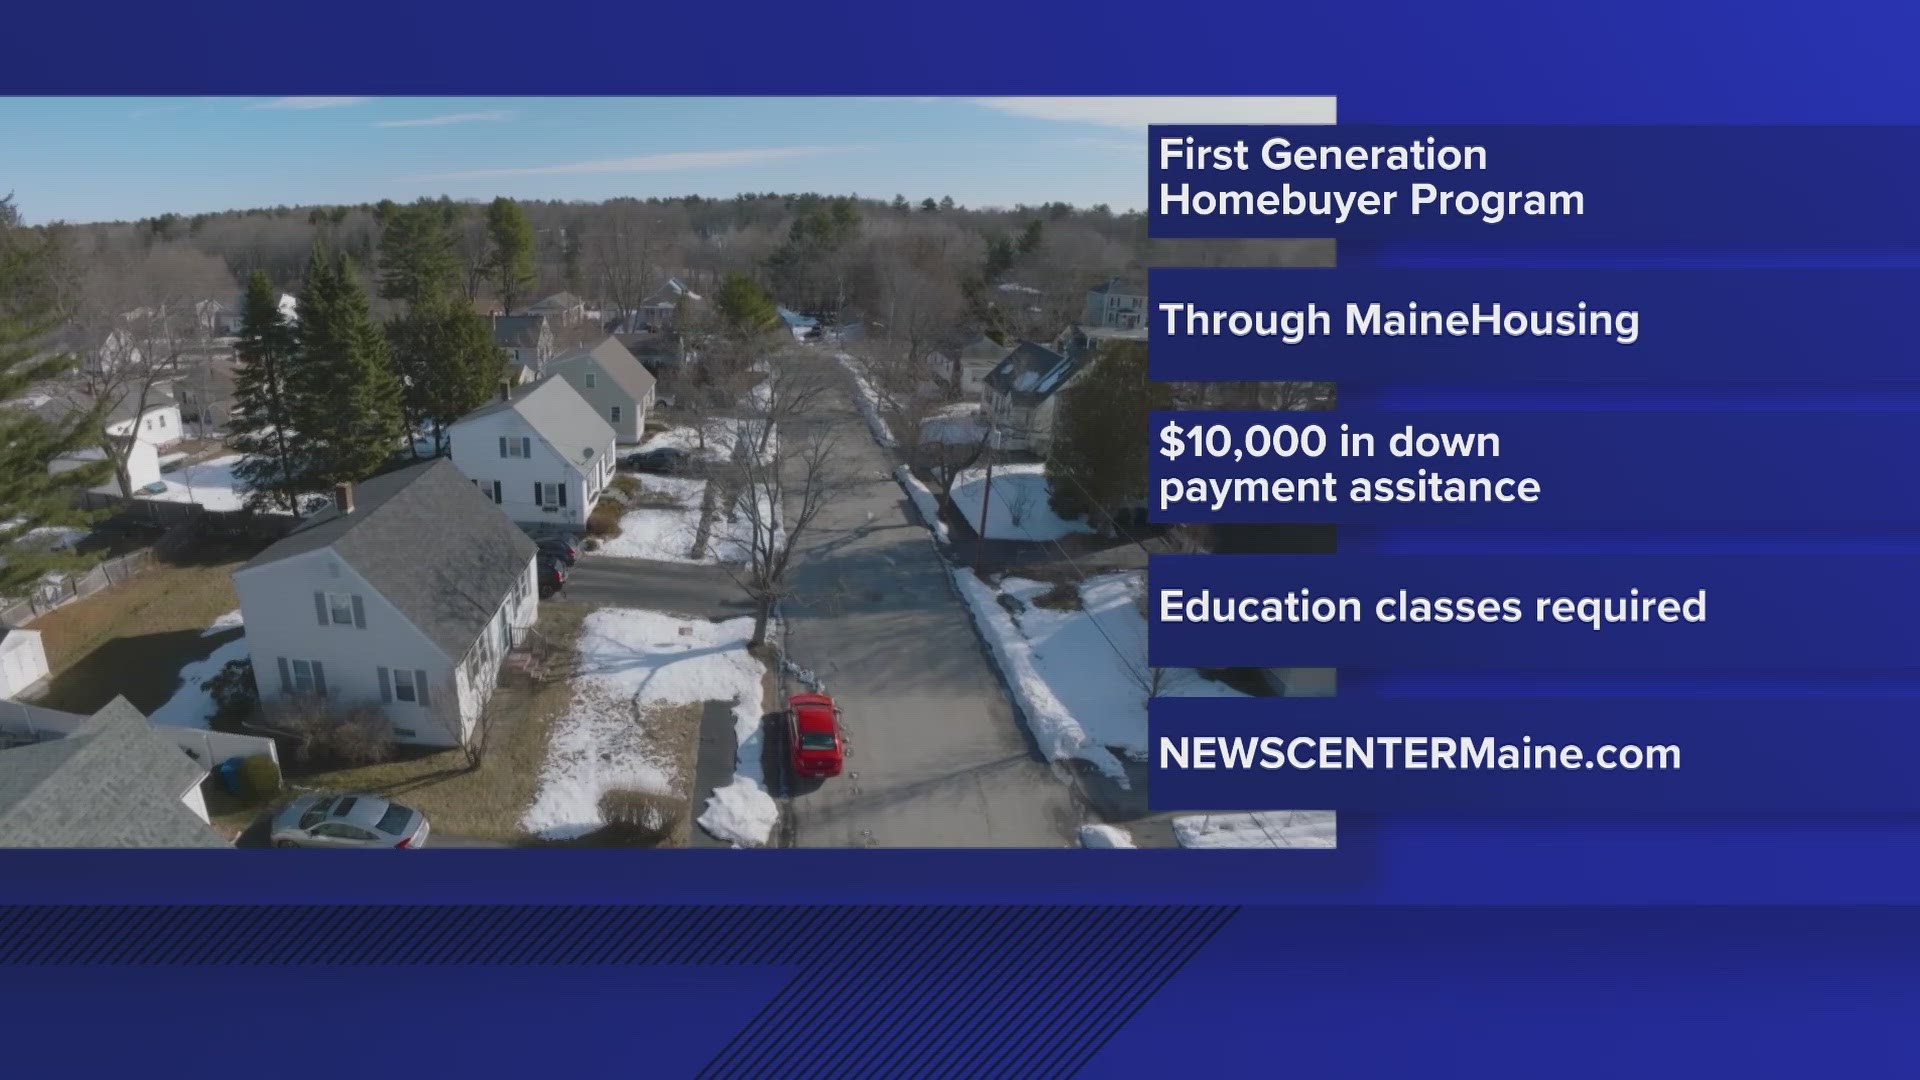 MaineHousing introduces firstgeneration homebuyer program